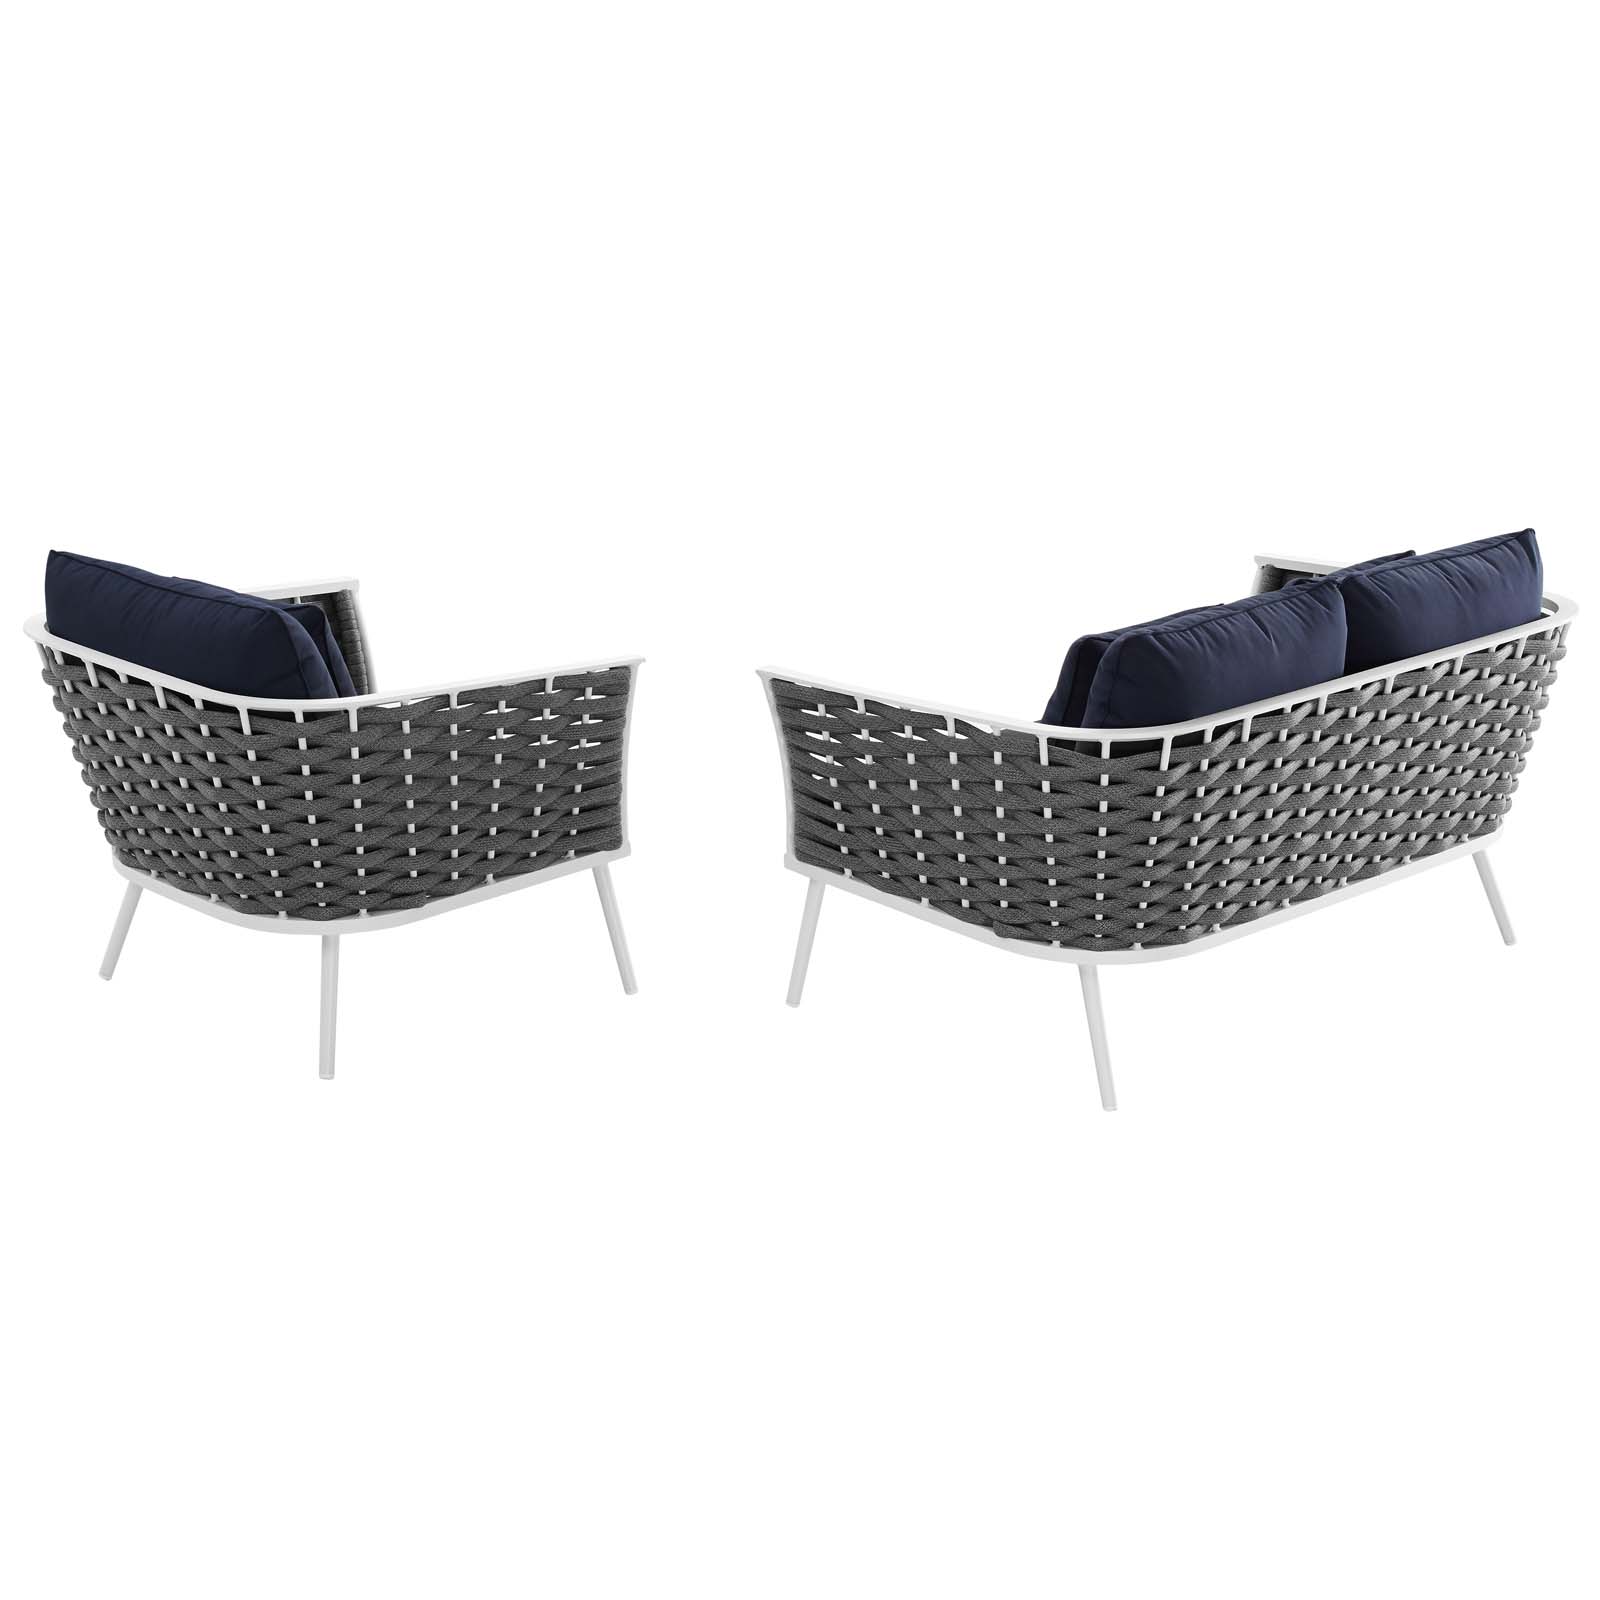 Modern Contemporary Urban Design Outdoor Patio Balcony Garden Furniture Lounge Chair and Sofa Set, Fabric Aluminium, White Navy - image 2 of 8